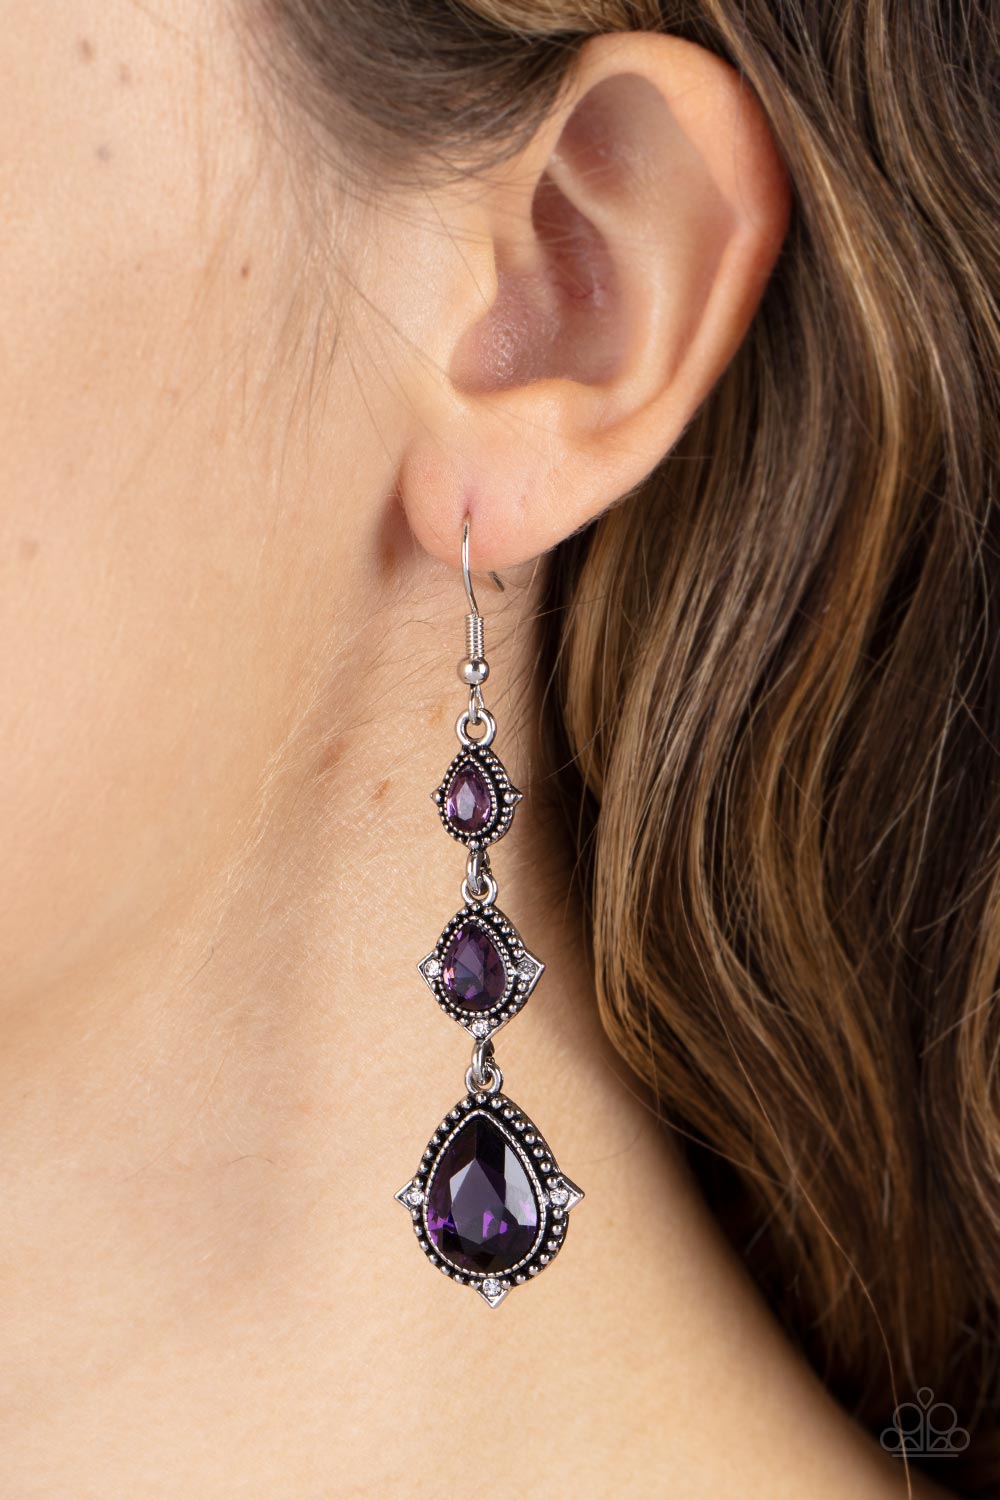 Prague Princess Purple Rhinestone Earrings - Paparazzi Accessories- lightbox - CarasShop.com - $5 Jewelry by Cara Jewels